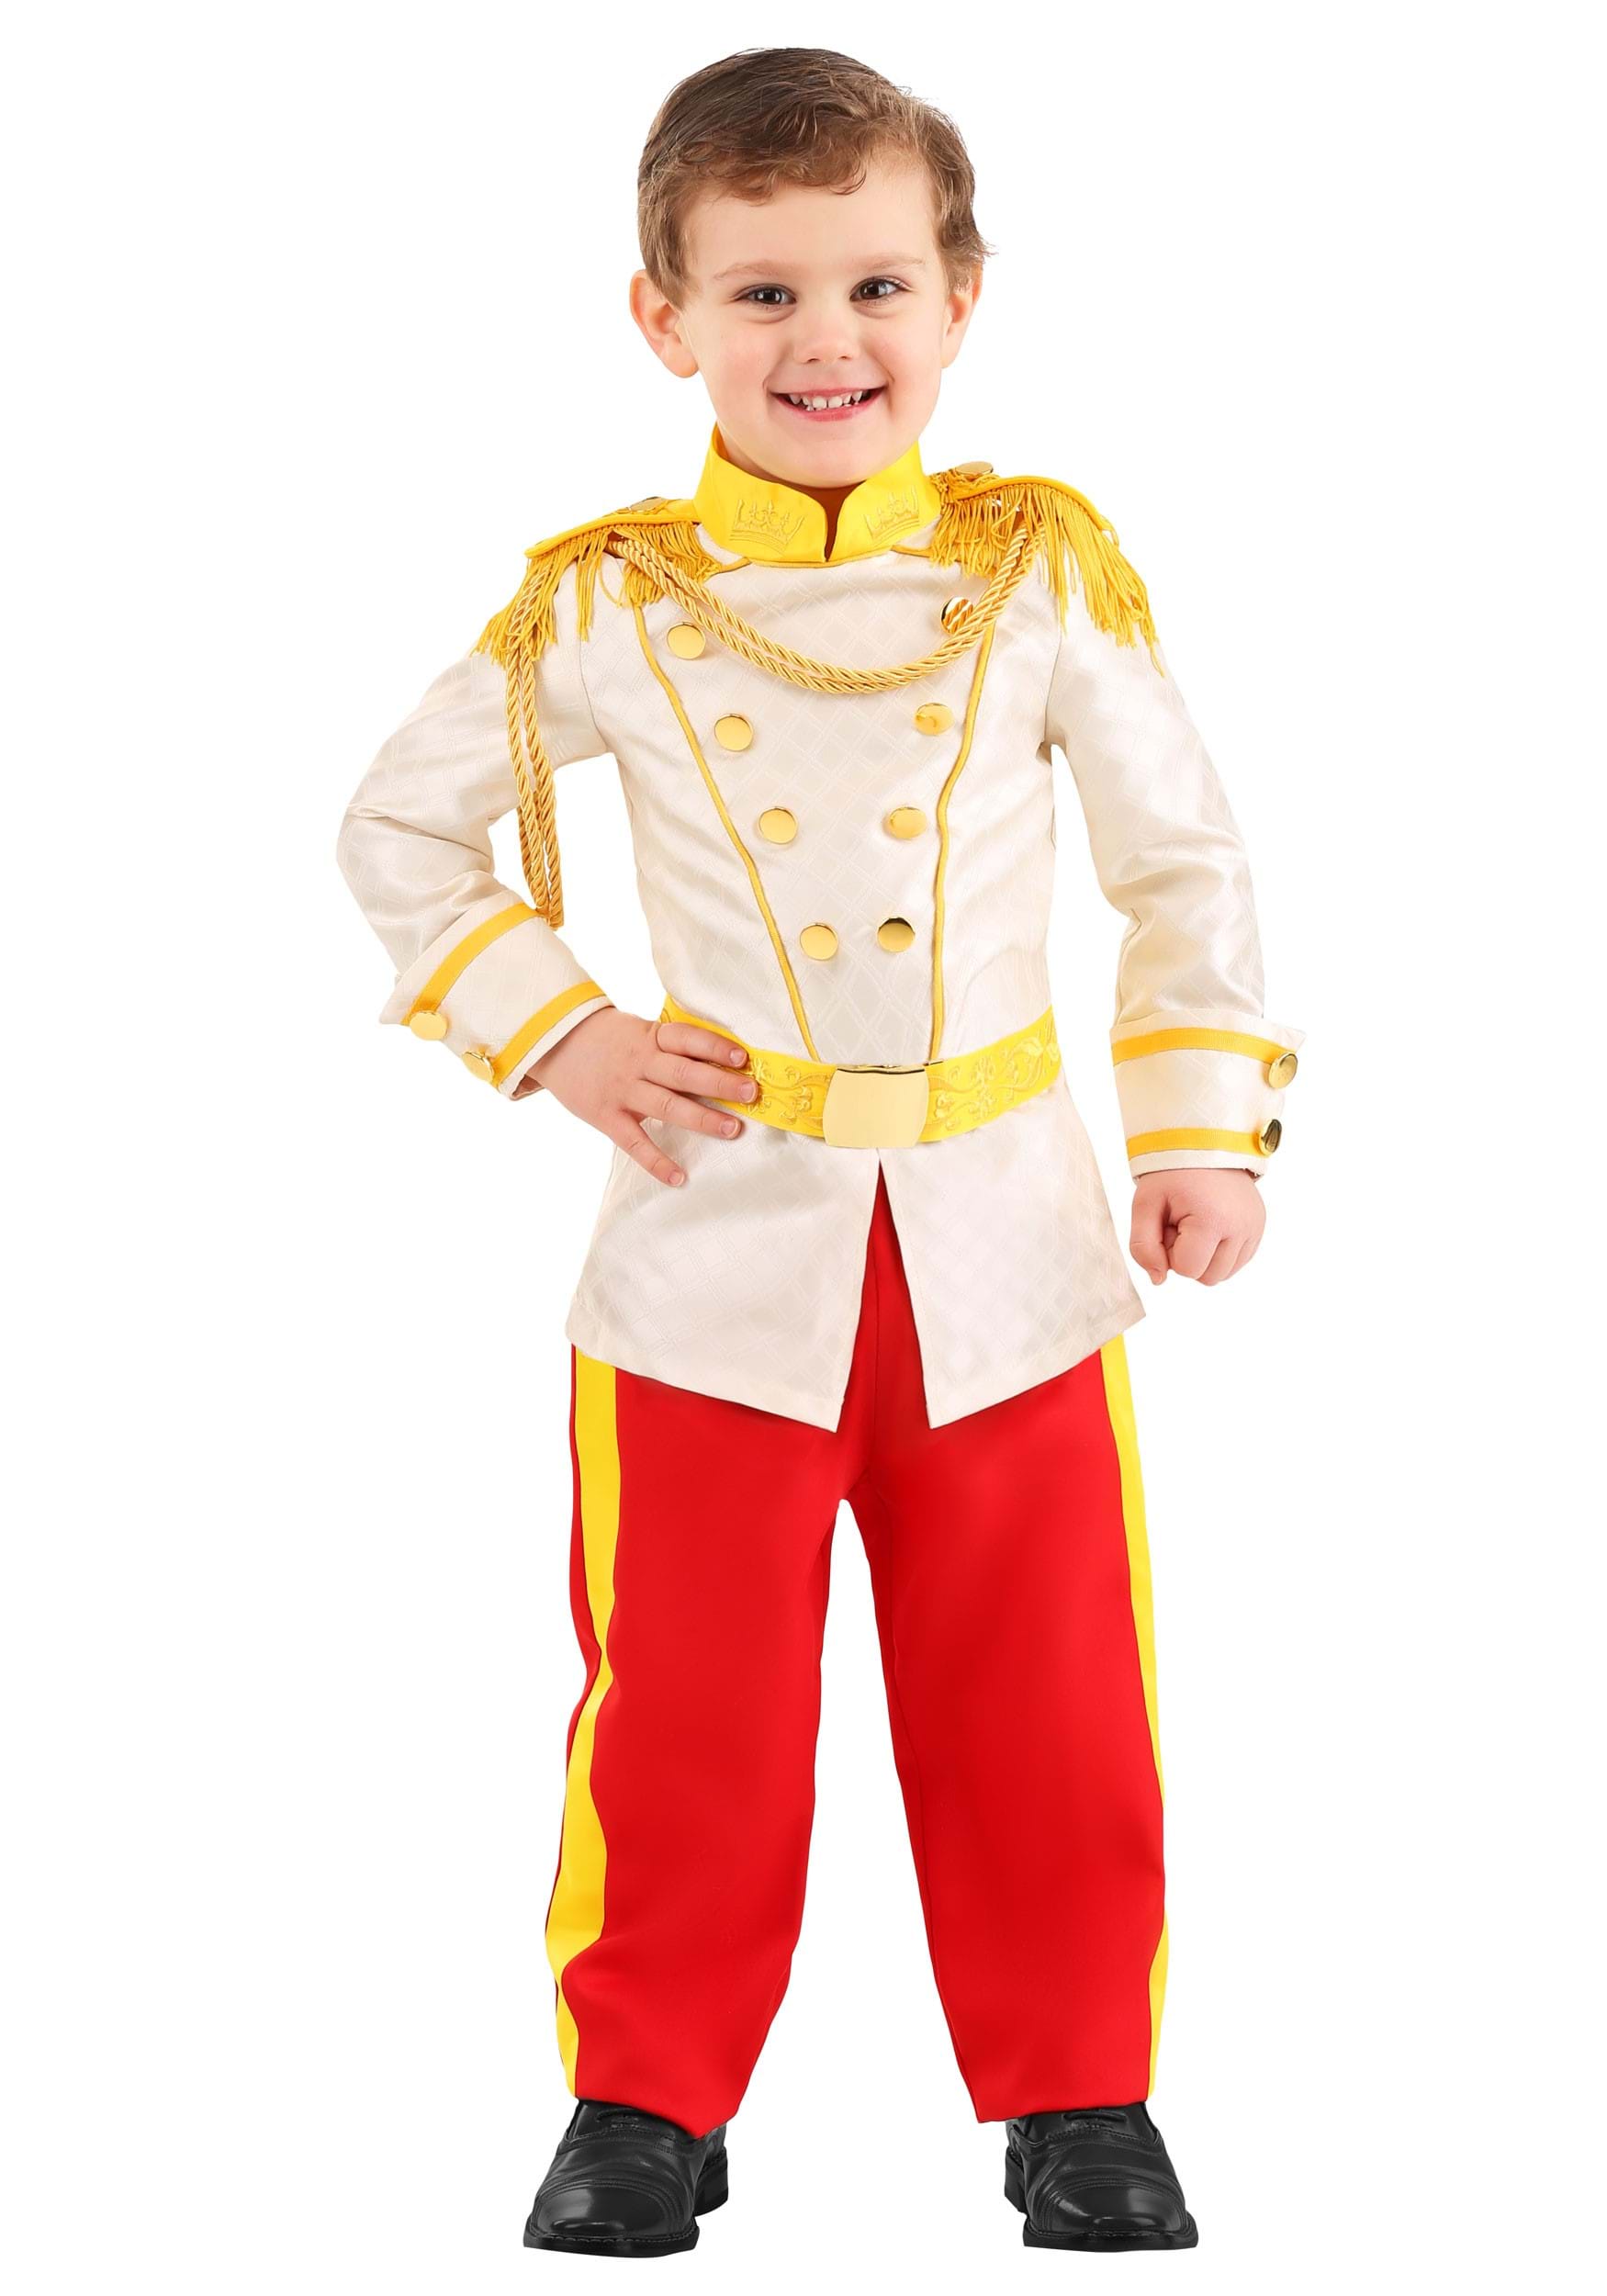 Photos - Fancy Dress Prince FUN Costumes Cinderella  Charming Toddler Costume for Boys | Disney 